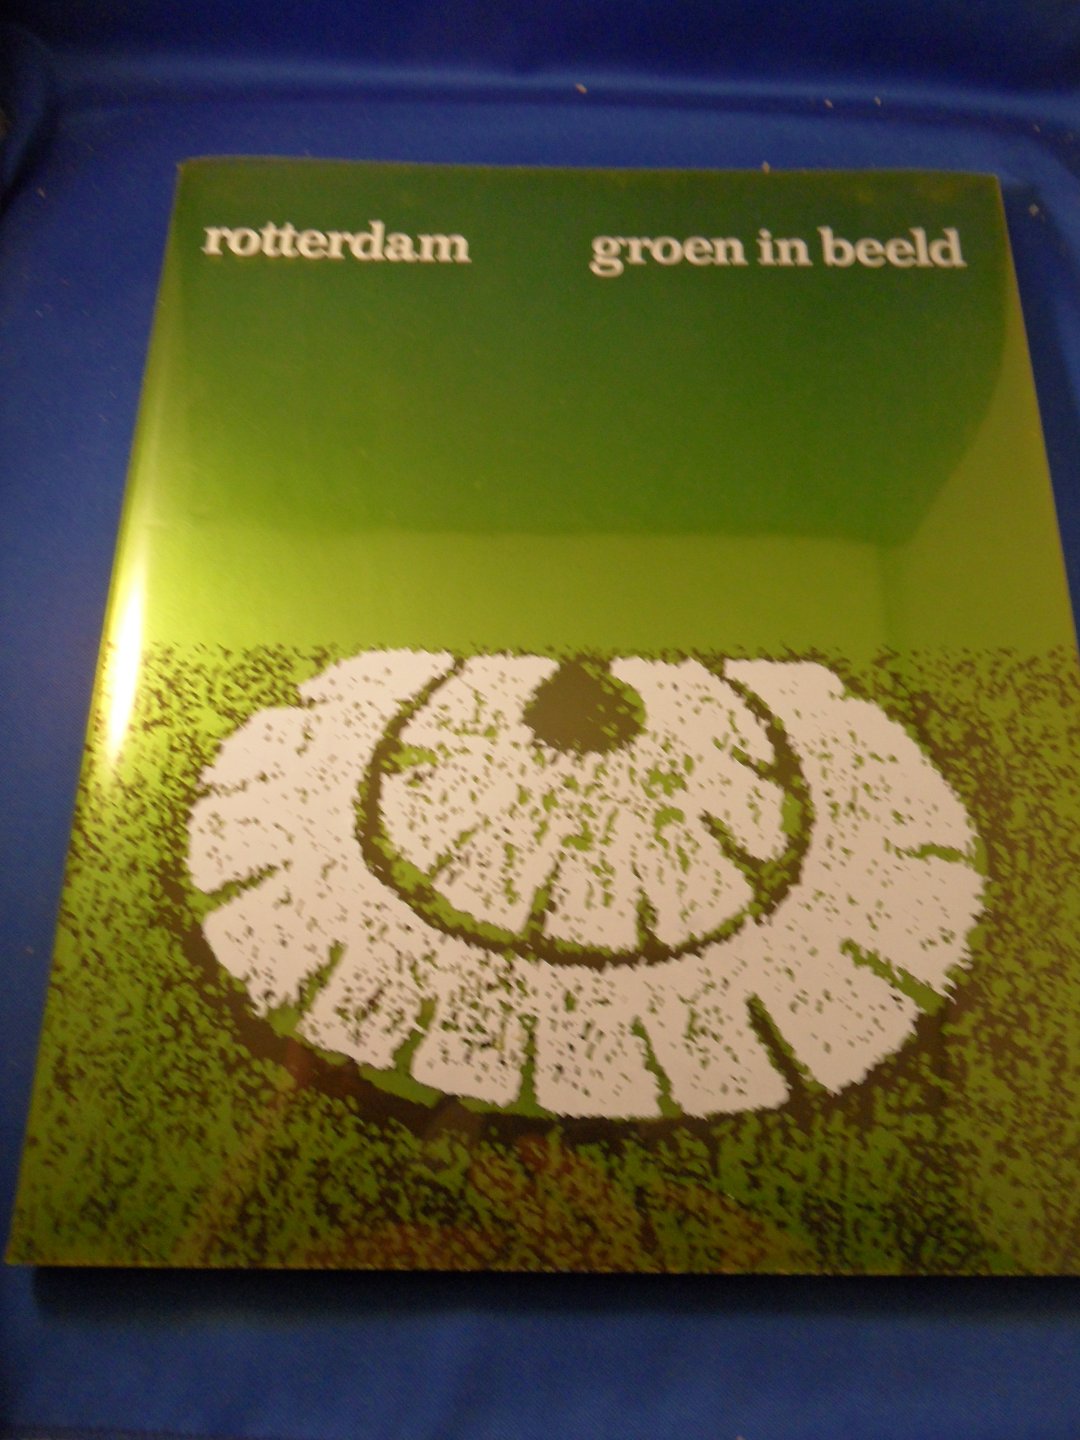 Bax, Jack - Rotterdam, groen in beeld